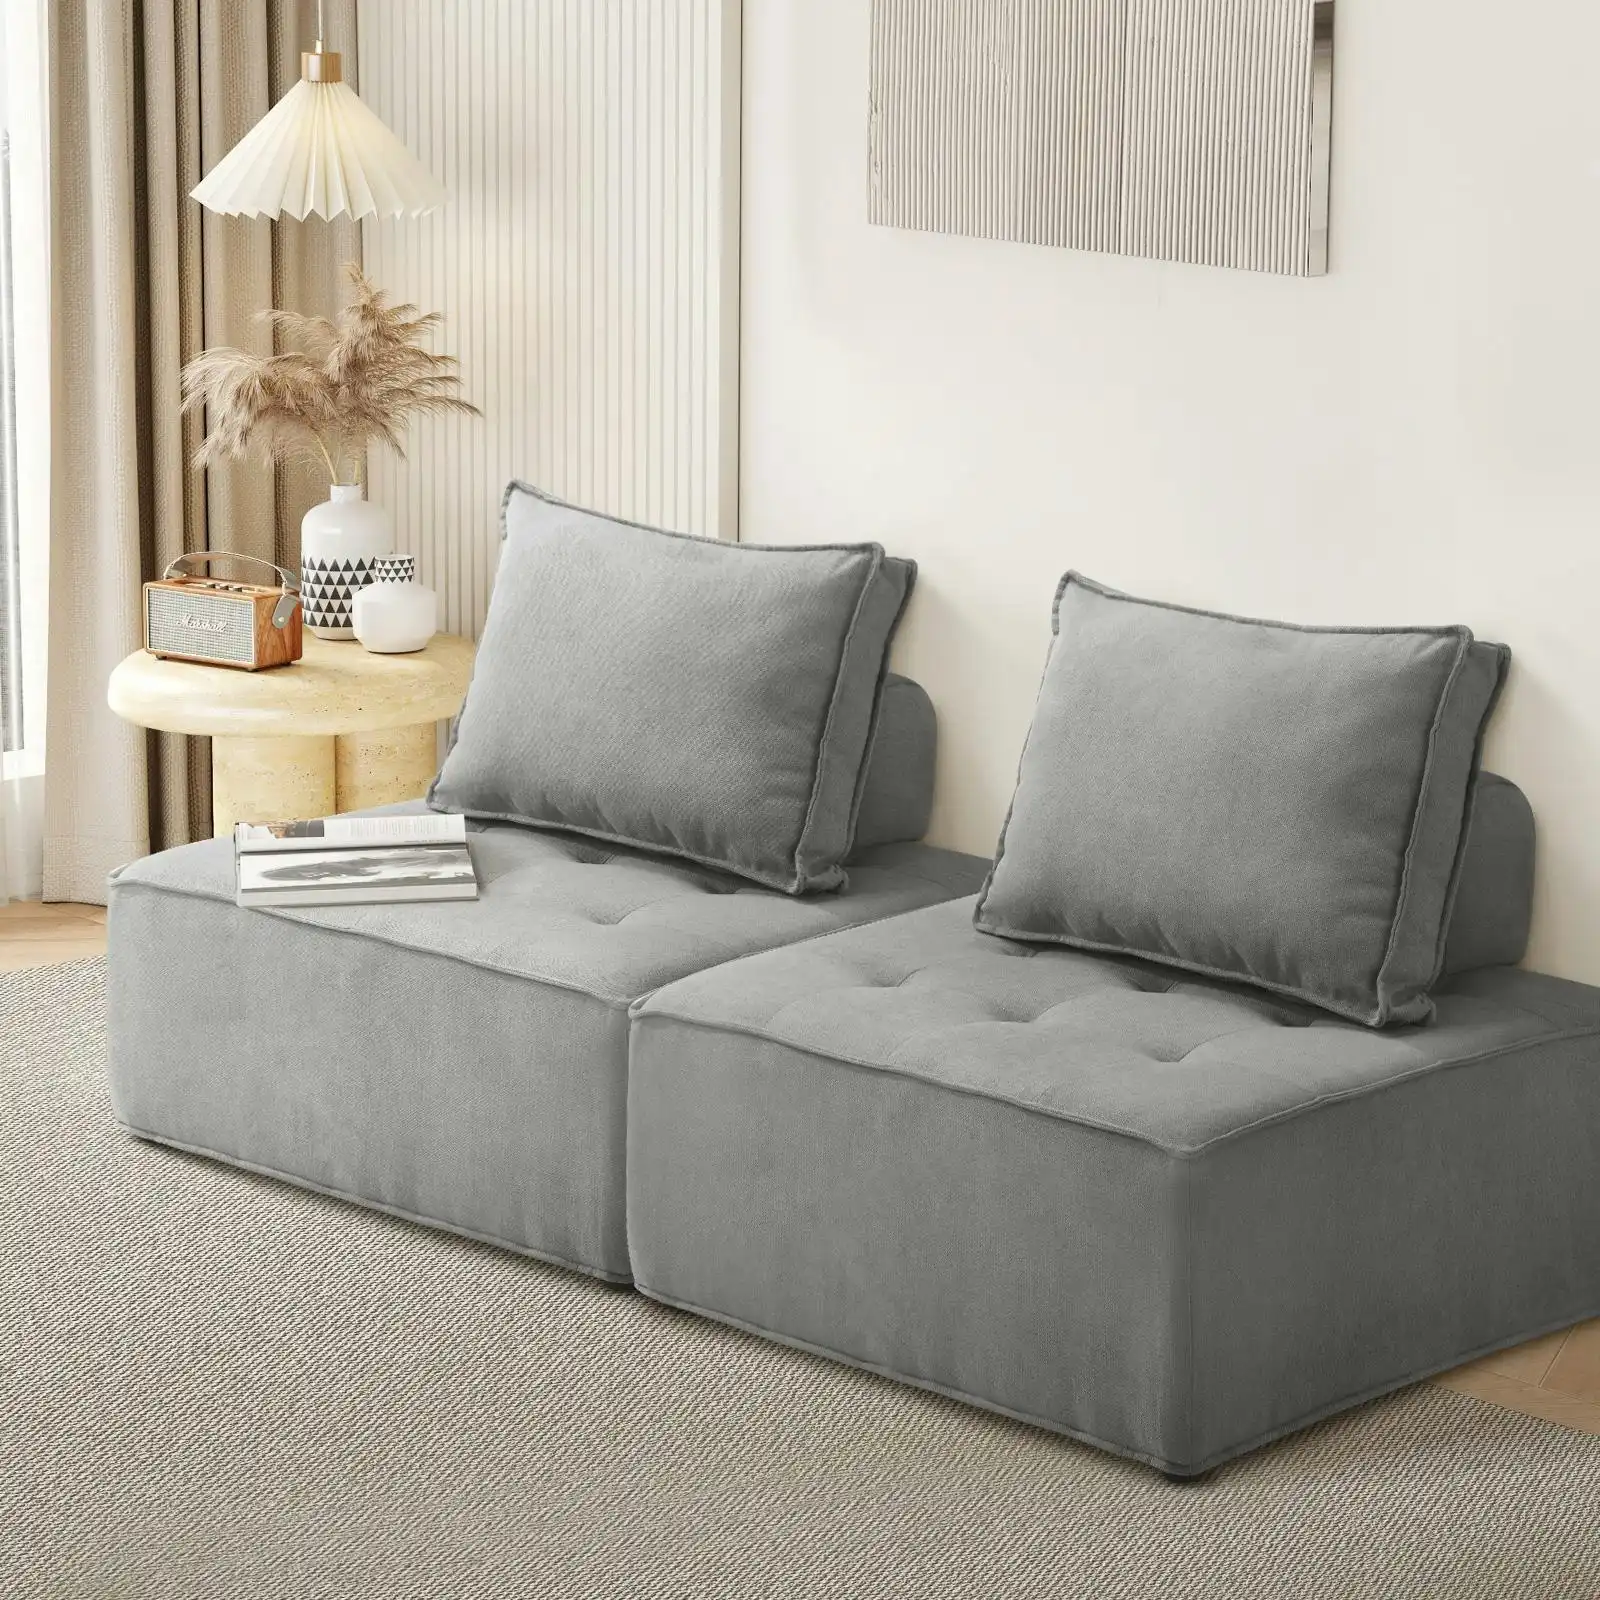 Oikiture 2PCS Modular Sofa Lounge Chair Armless Adjustable Back Linen Grey